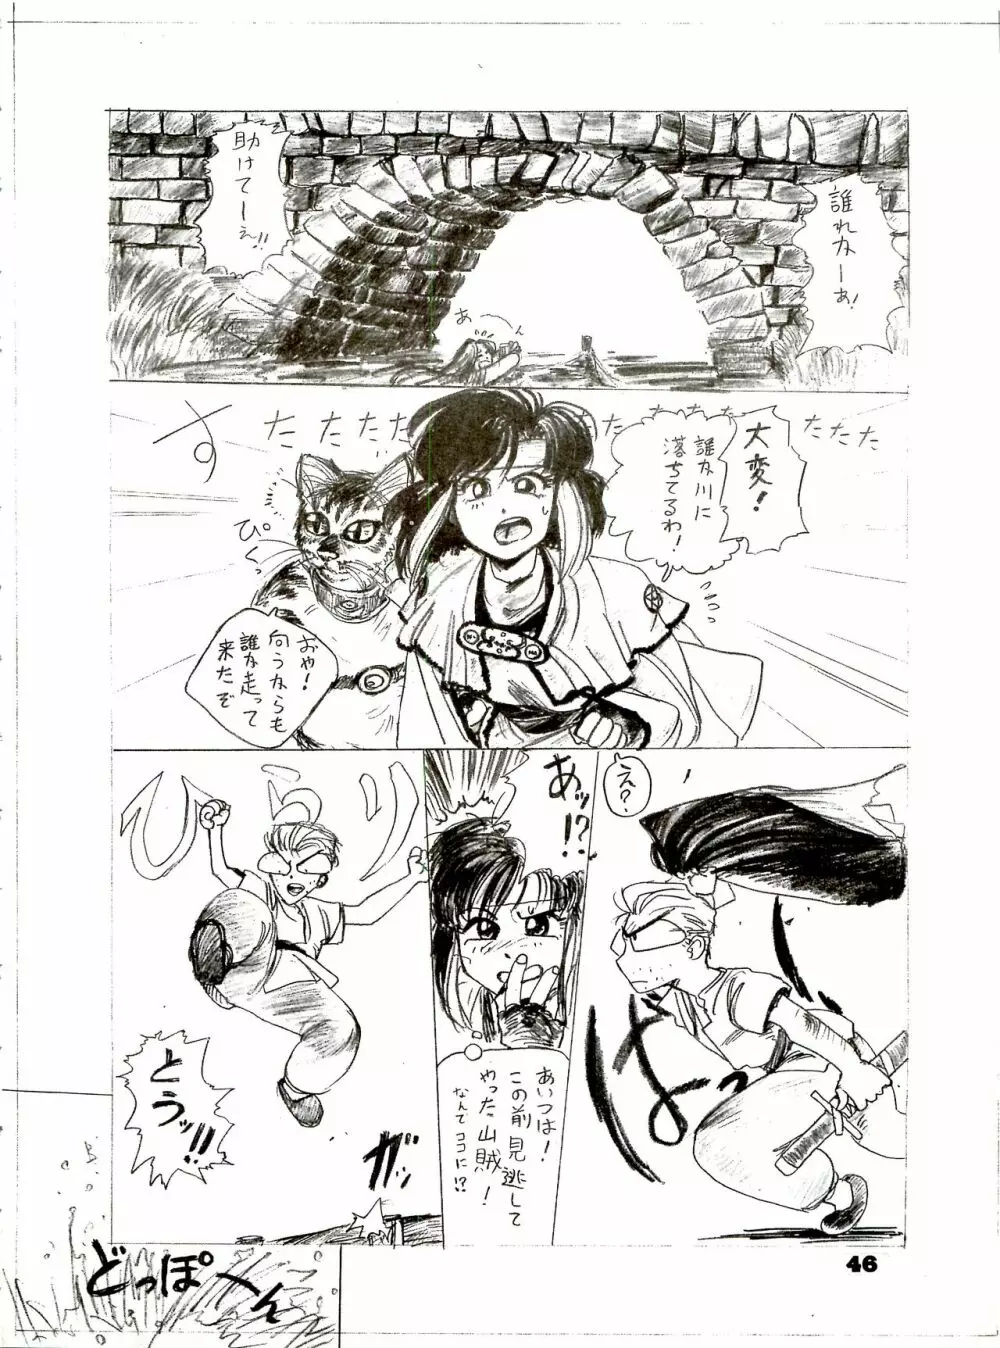 THE SECRET OF 血祭屋 番外編 vol.1 えんぴつ画研究室 - page46